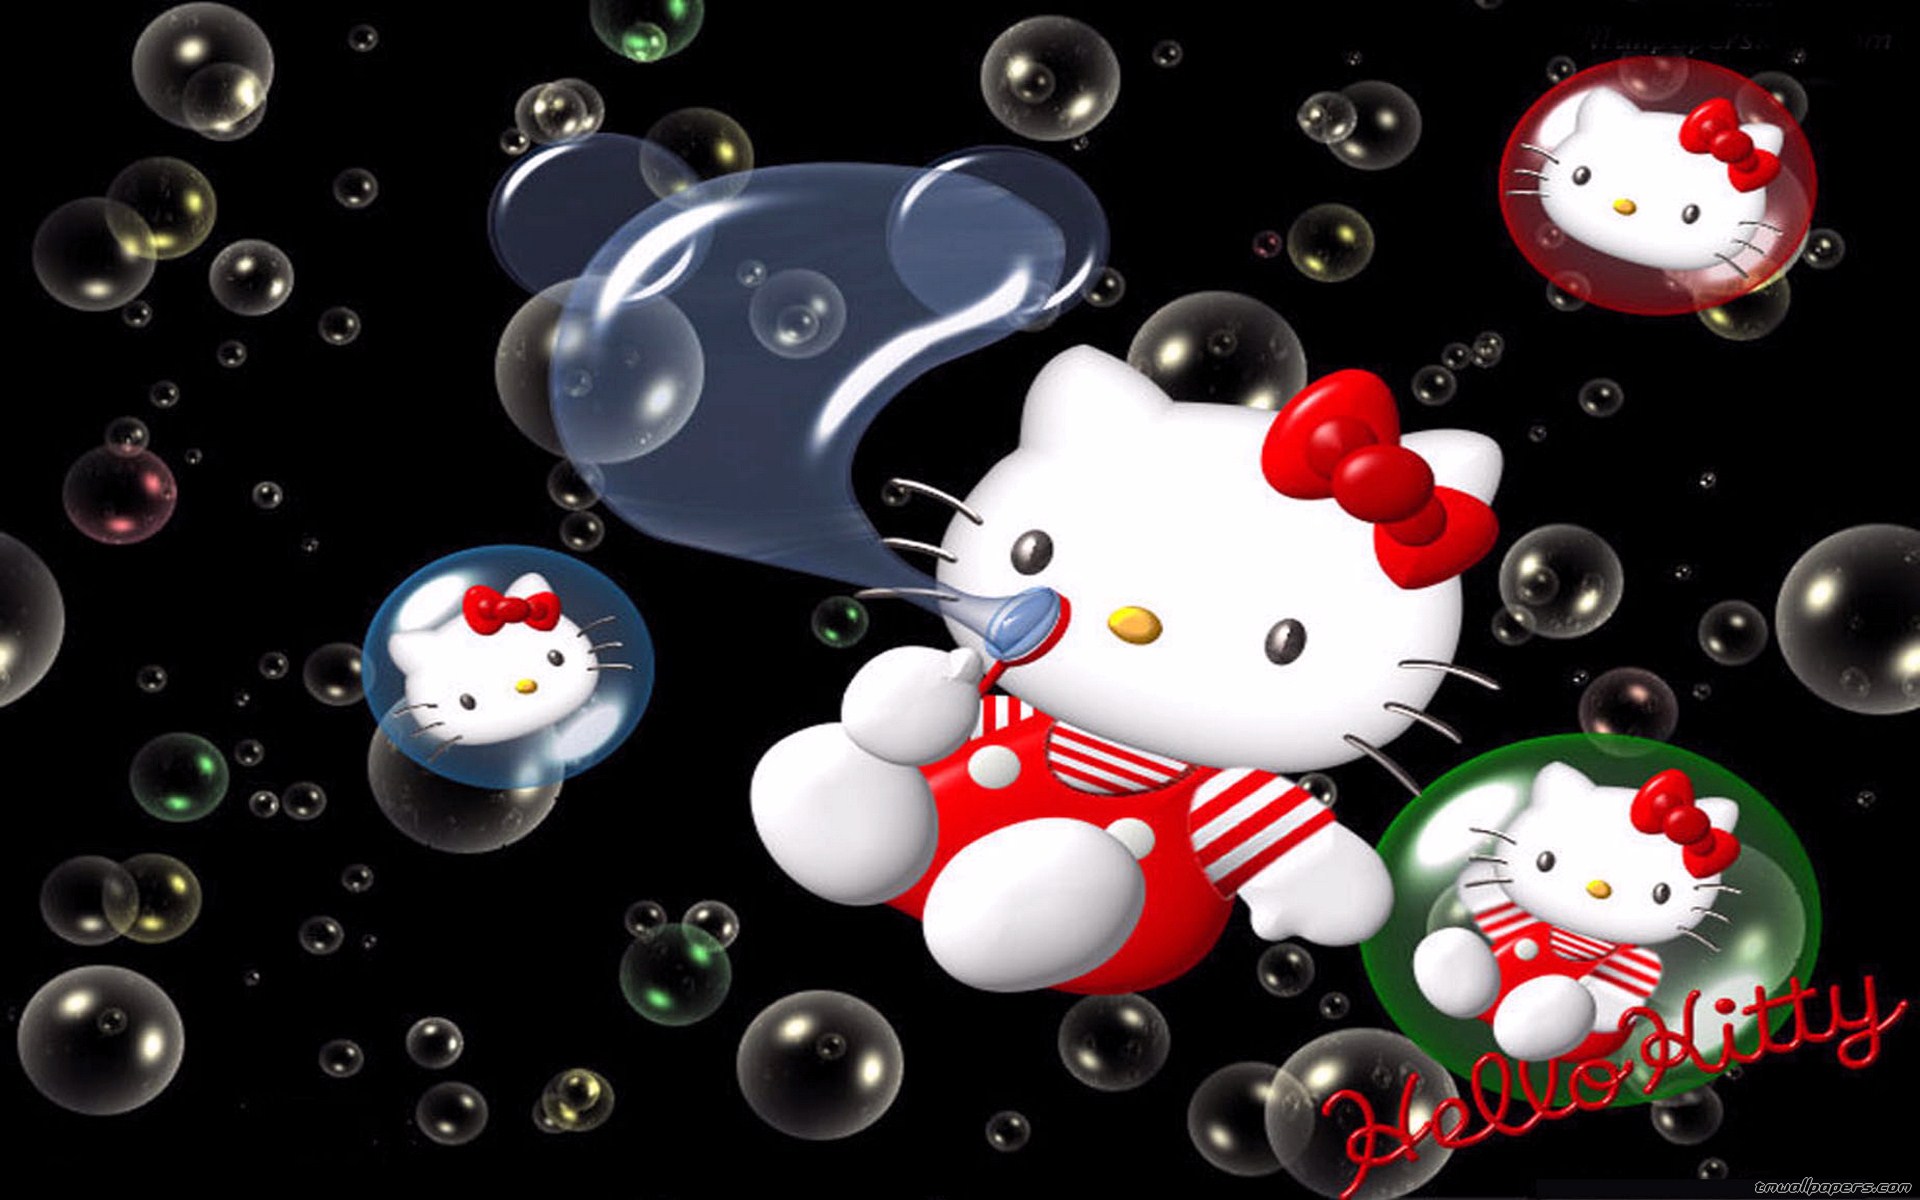 Download Hello Kitty Wallpapers - Wallpapers For Desktop Wallpaper